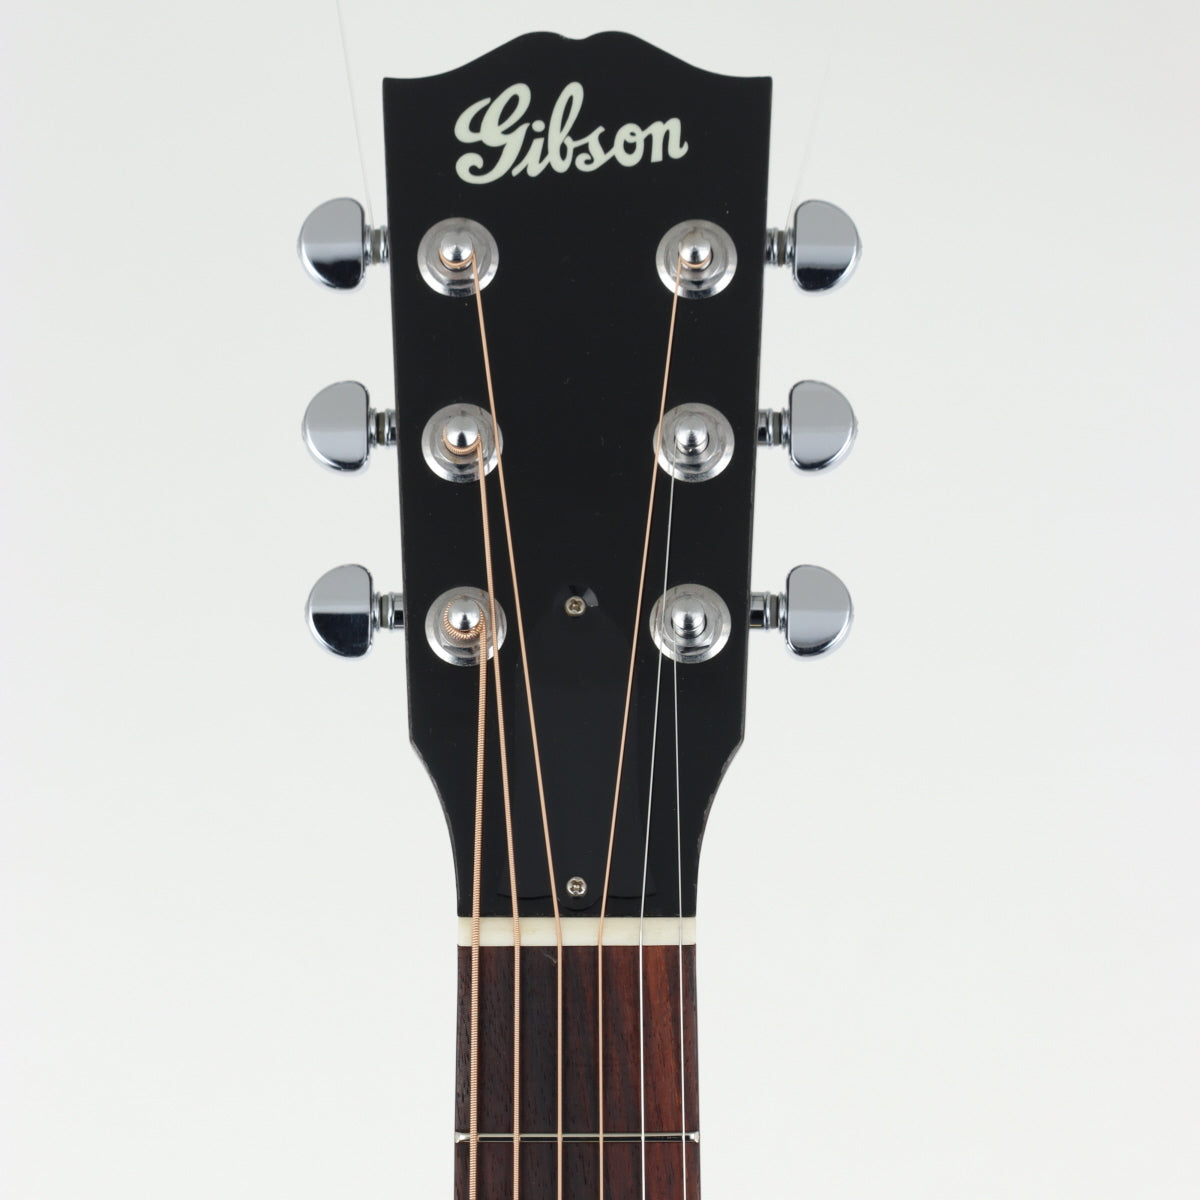 [SN 01716026] USED Gibson / Blues King Vintage Sunburst [11]